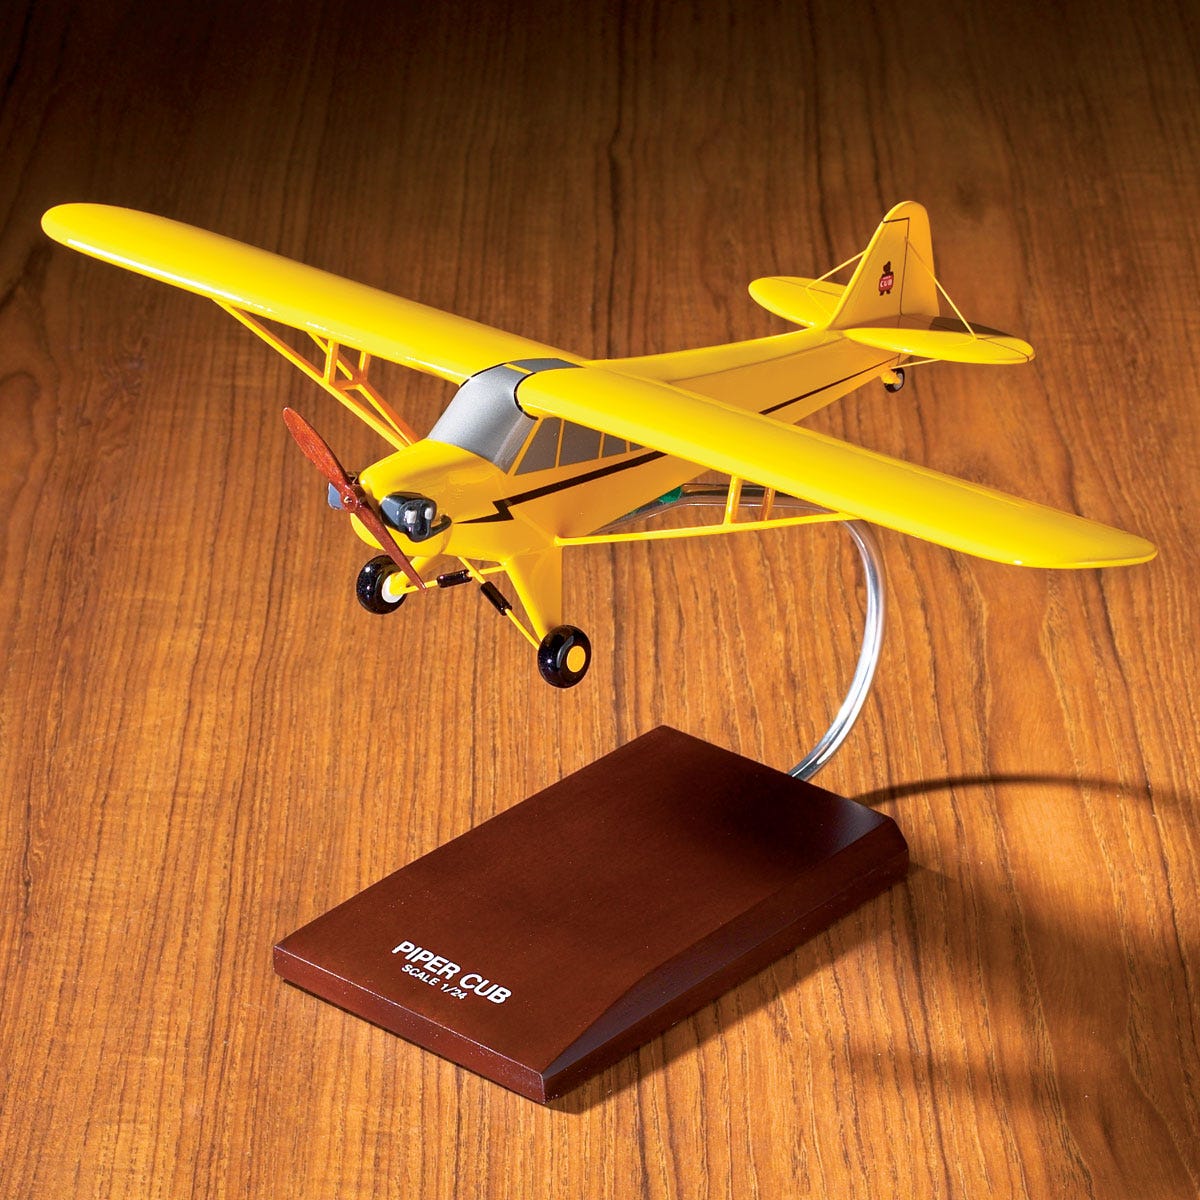 piper j 3 cub model airplane